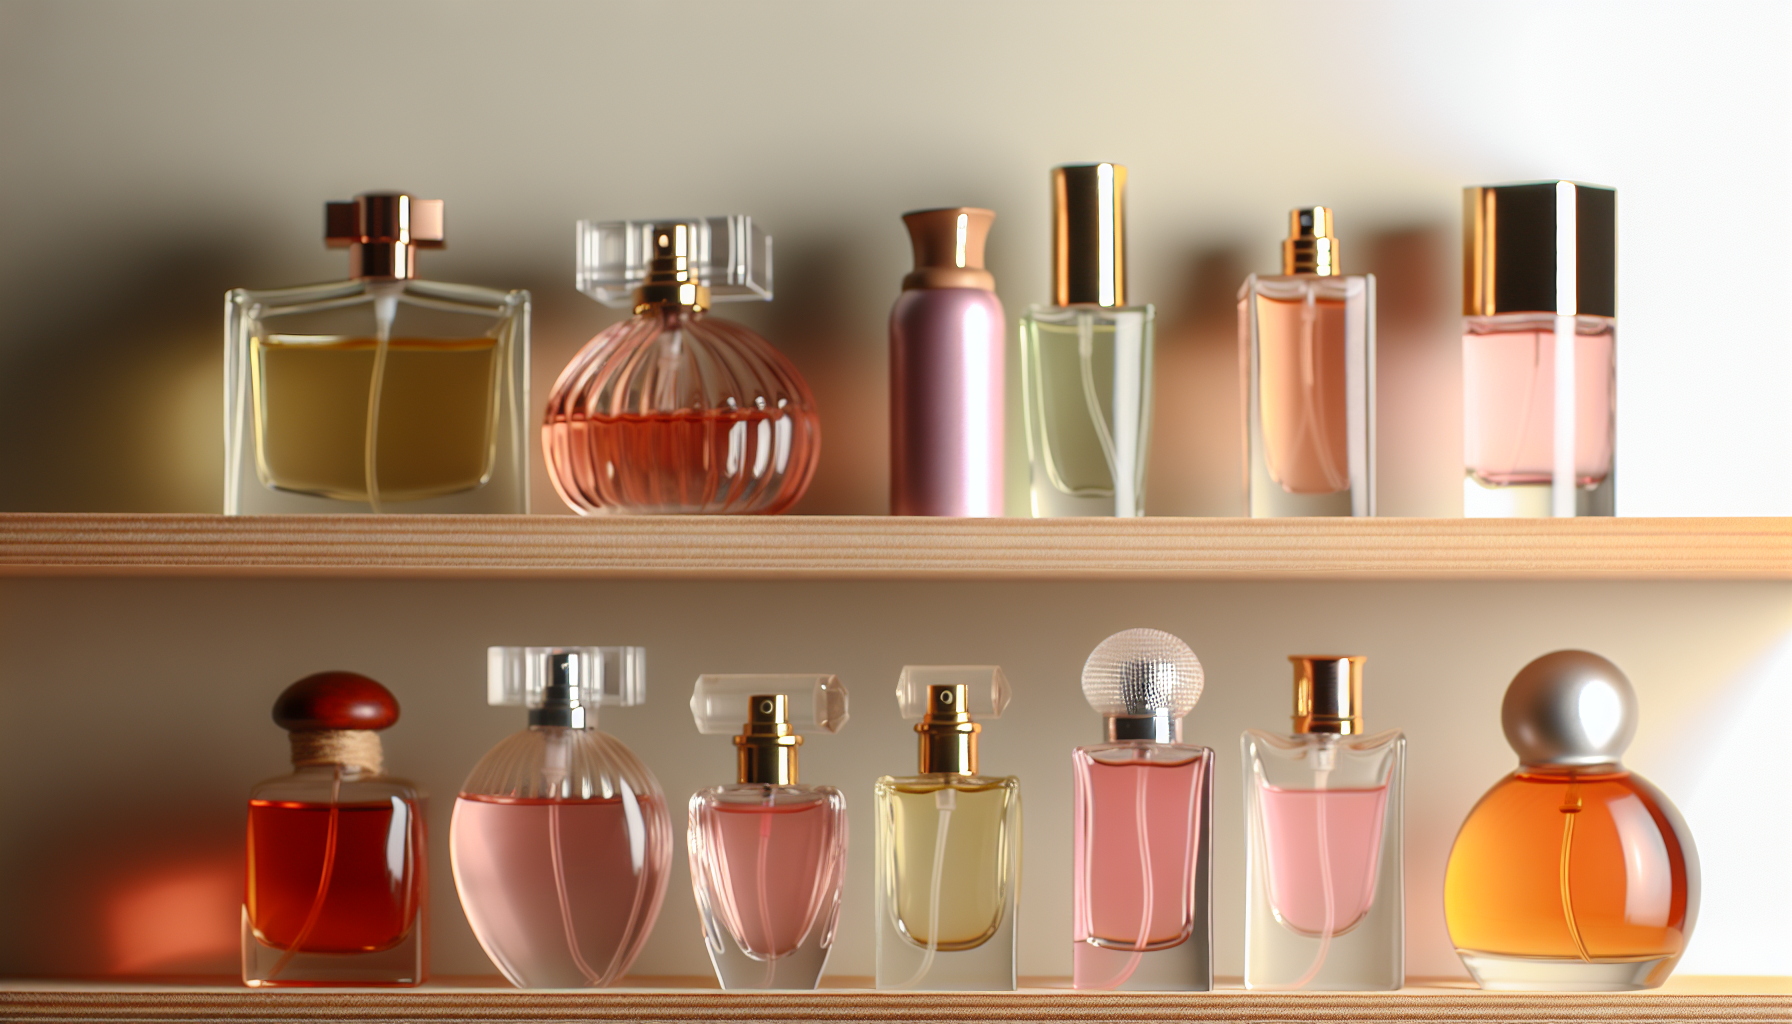 Assortment of perfume bottles on a shelf